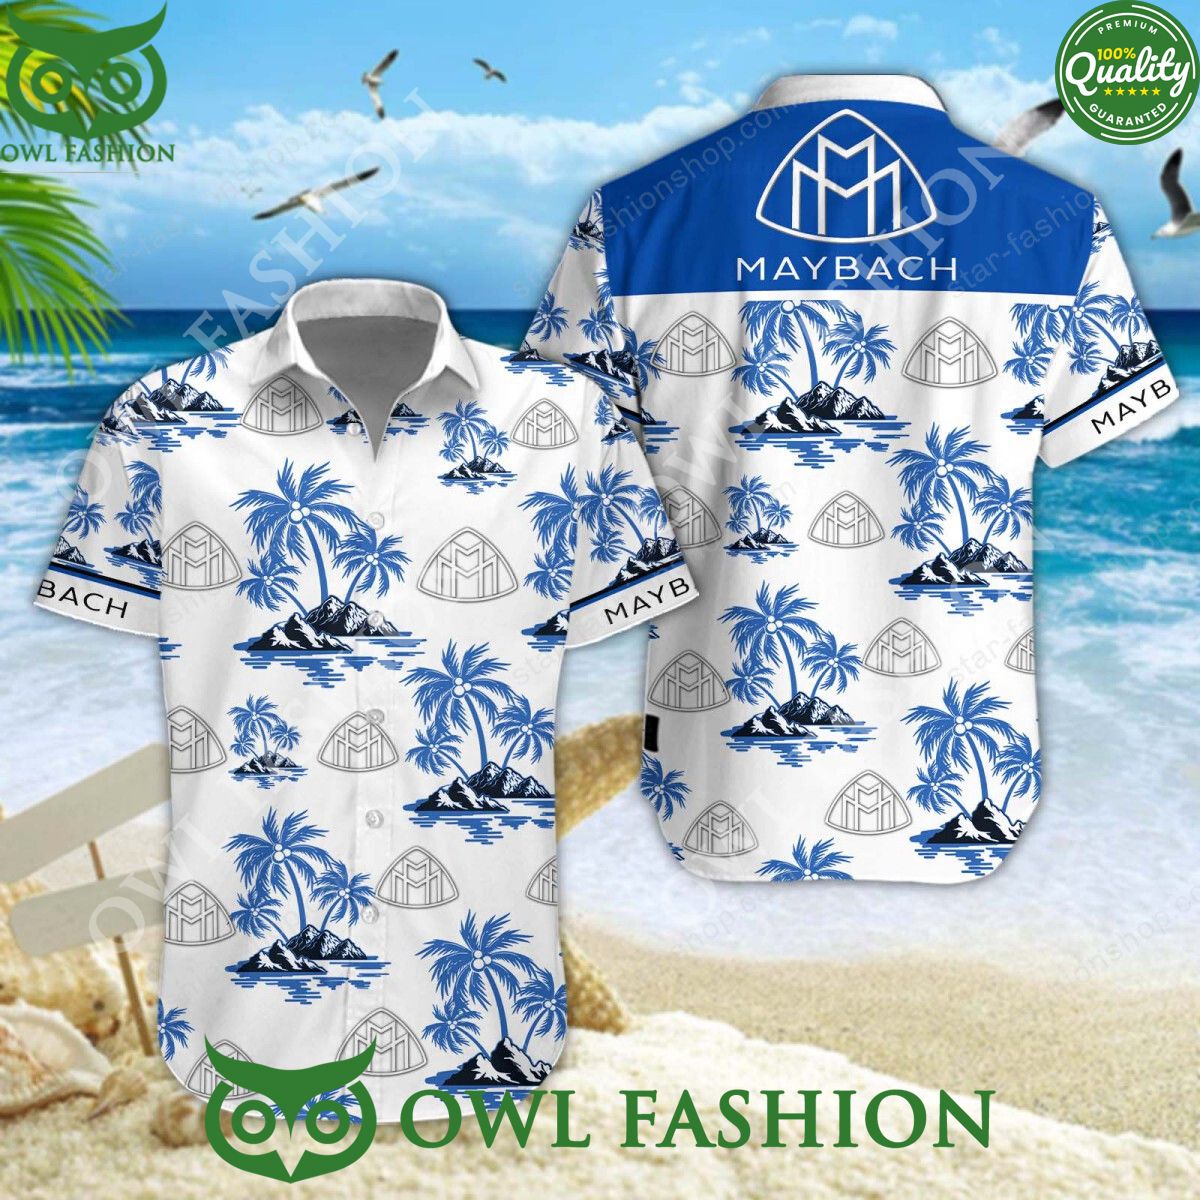 maybach luxury motor brand hawaiian shirt and shorts 1 nzdj5.jpg